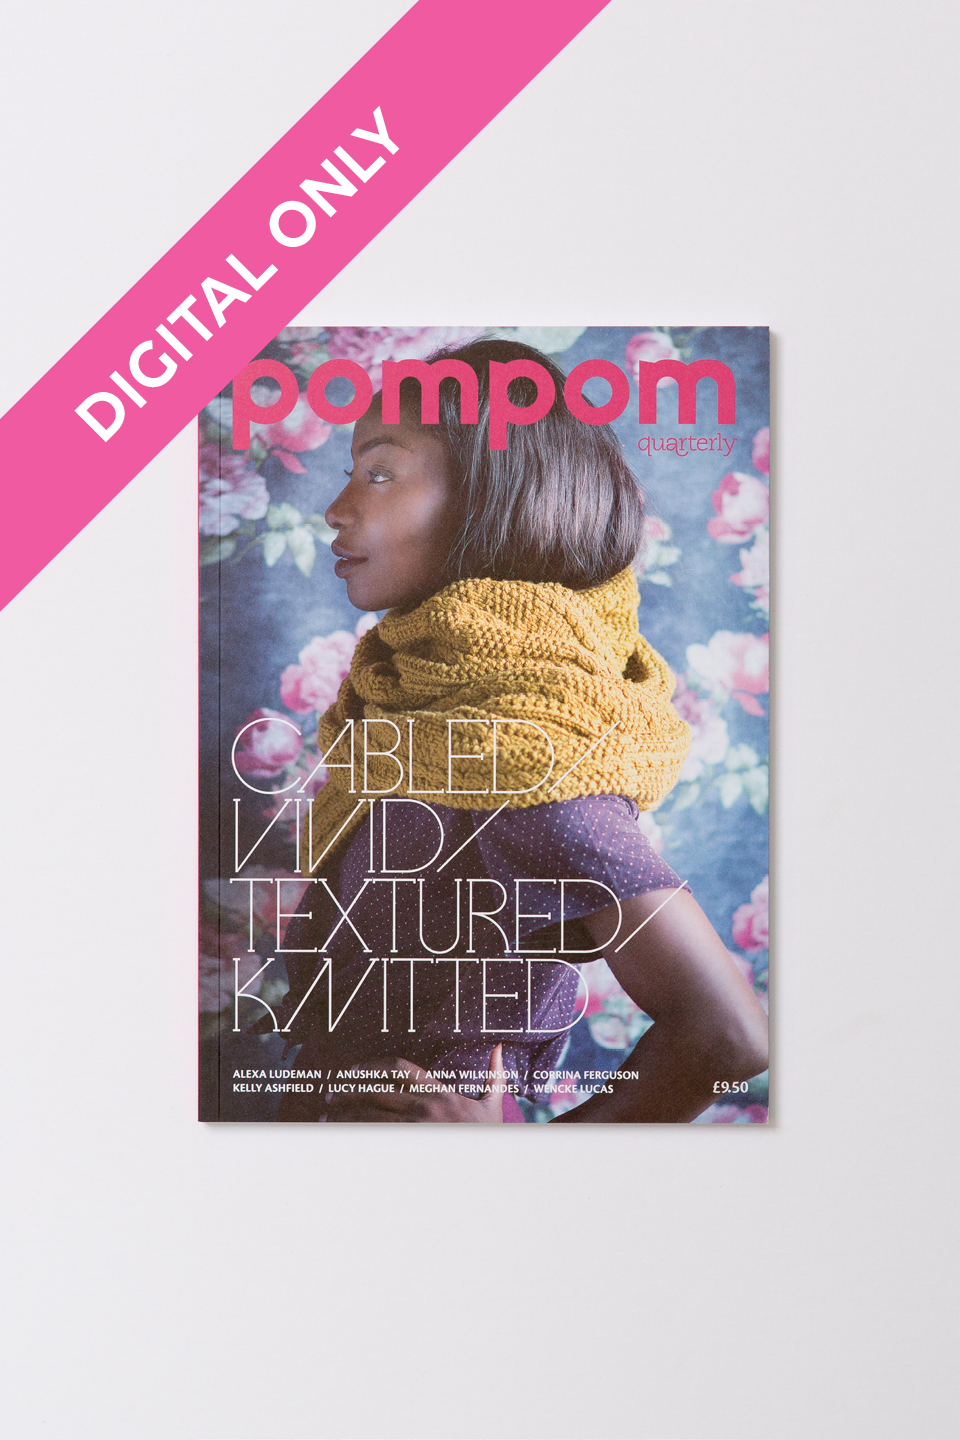 Issue 6, Autumn 2013